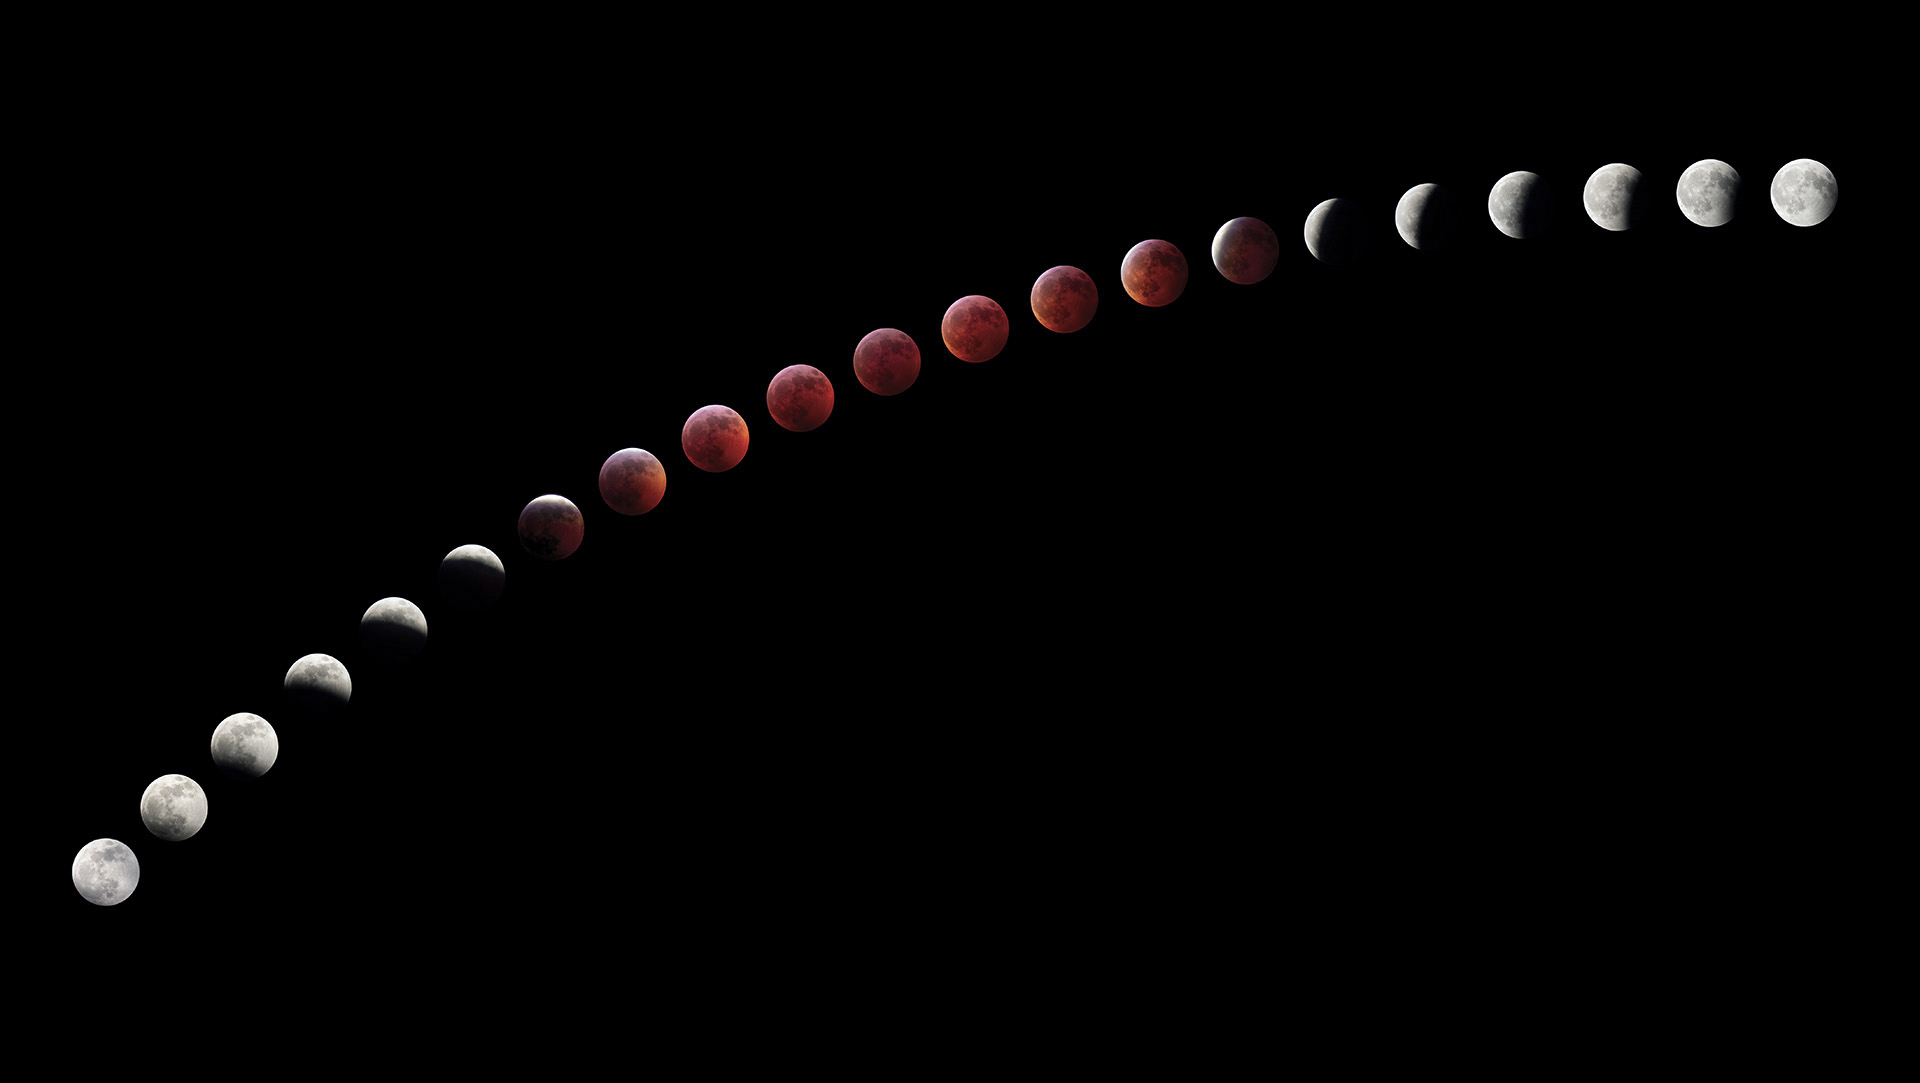 Total Lunar Eclipse - Composite